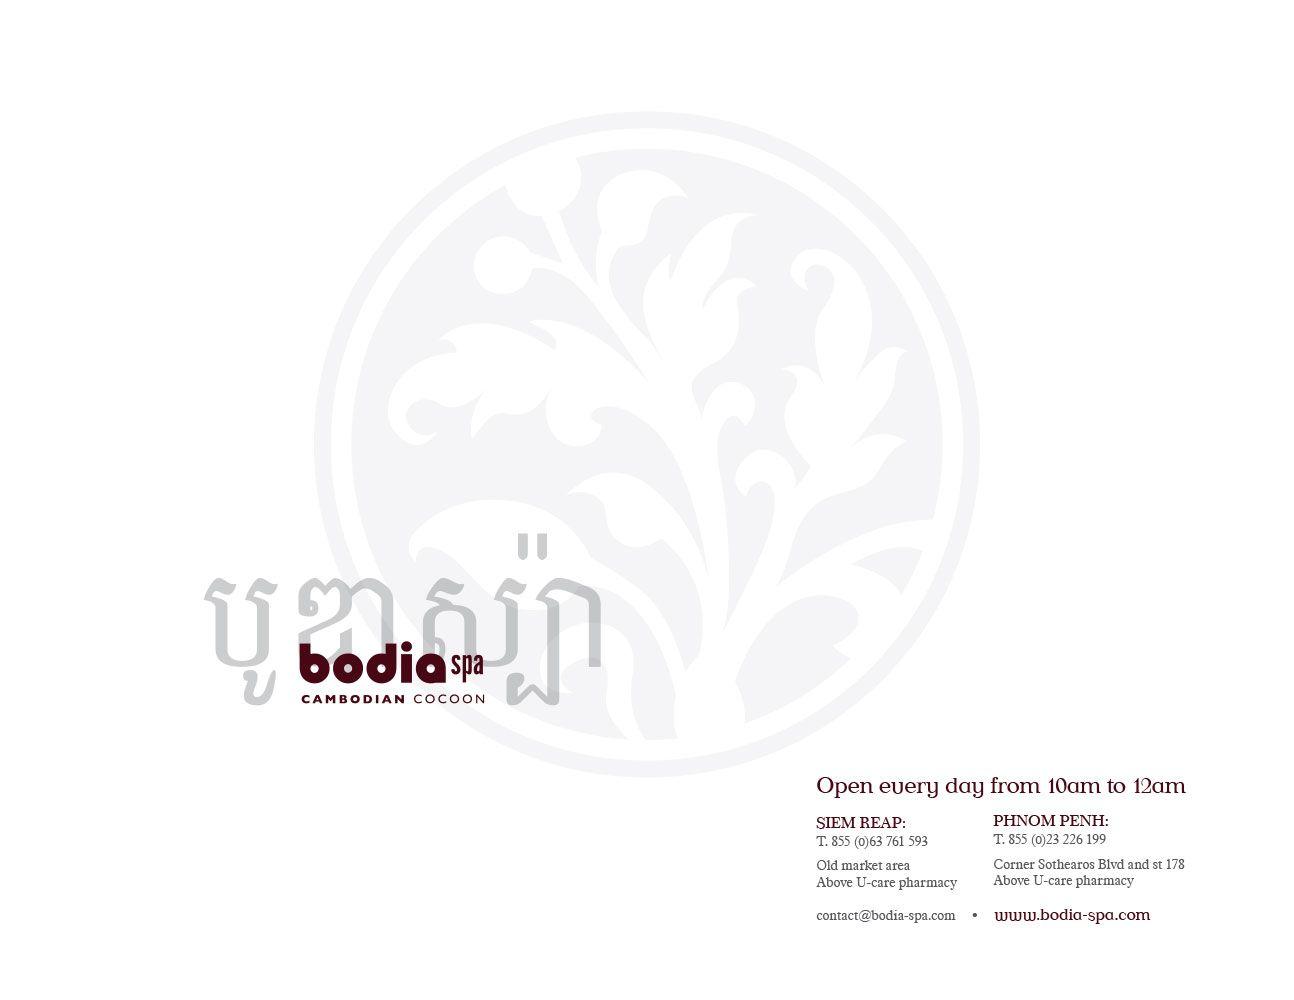 UCare Cambodia Logo - Bodia Spa menu